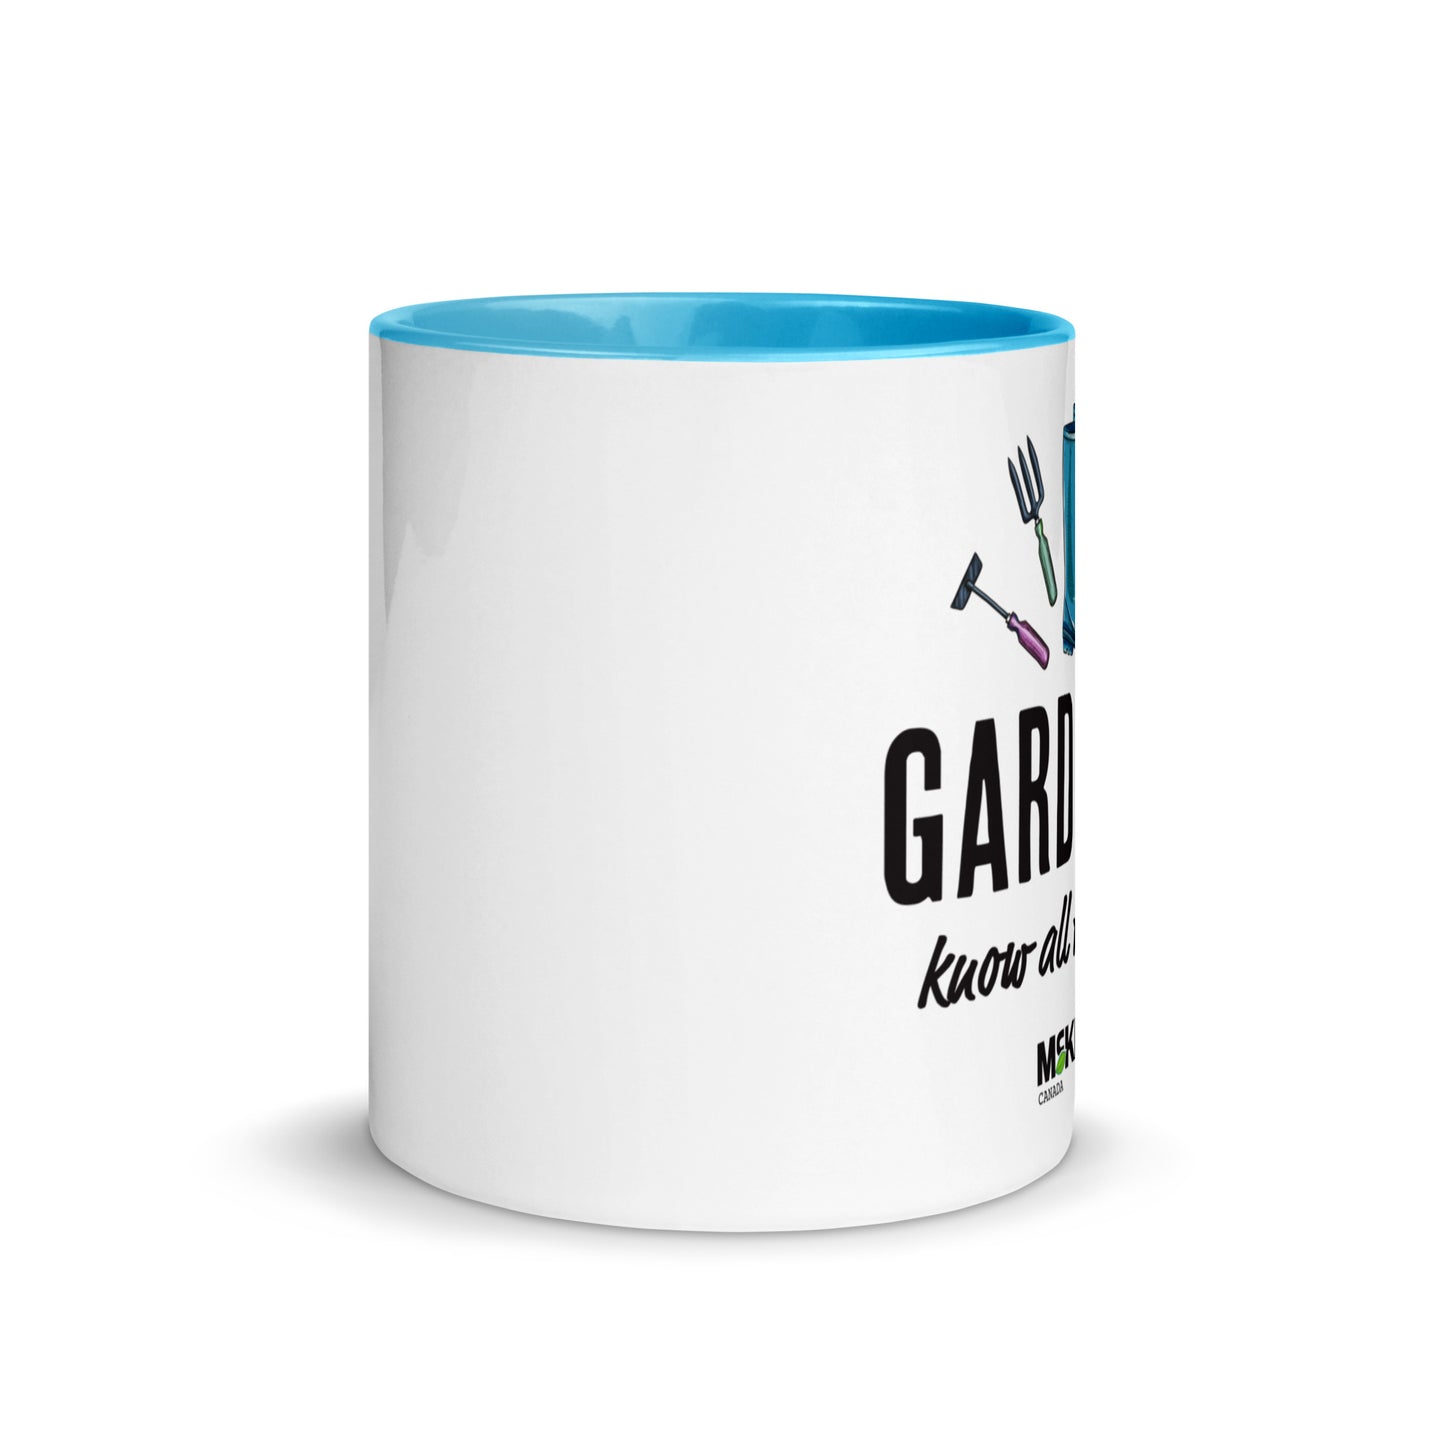 "Gardner's Know All the Best Dirt" Ceramic Mug, 11 oz